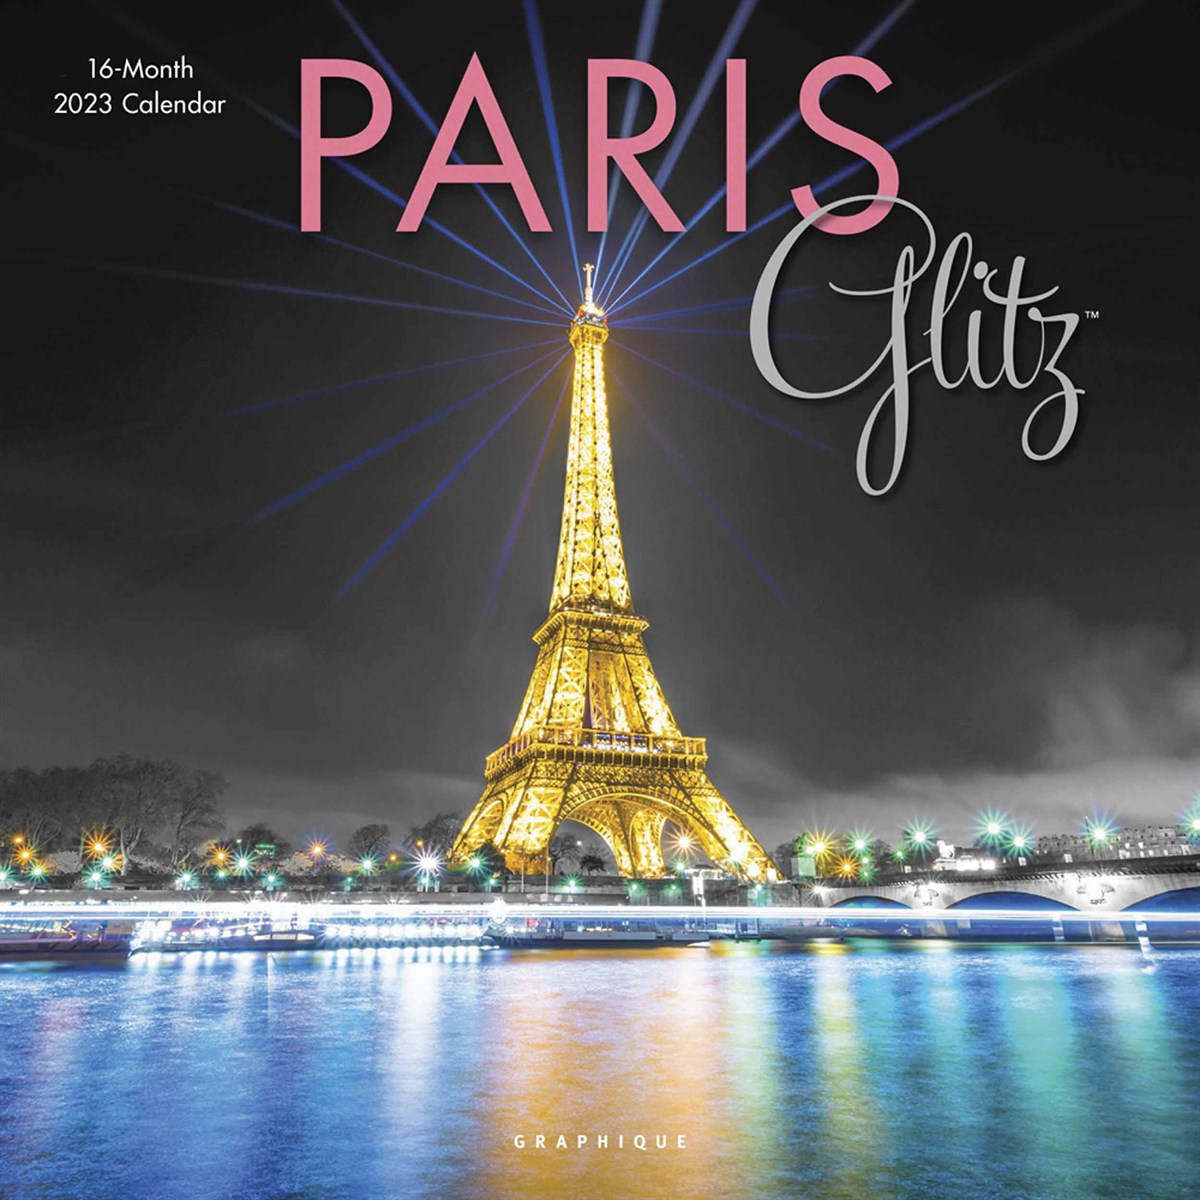 Paris Glitz 2023 Calendars